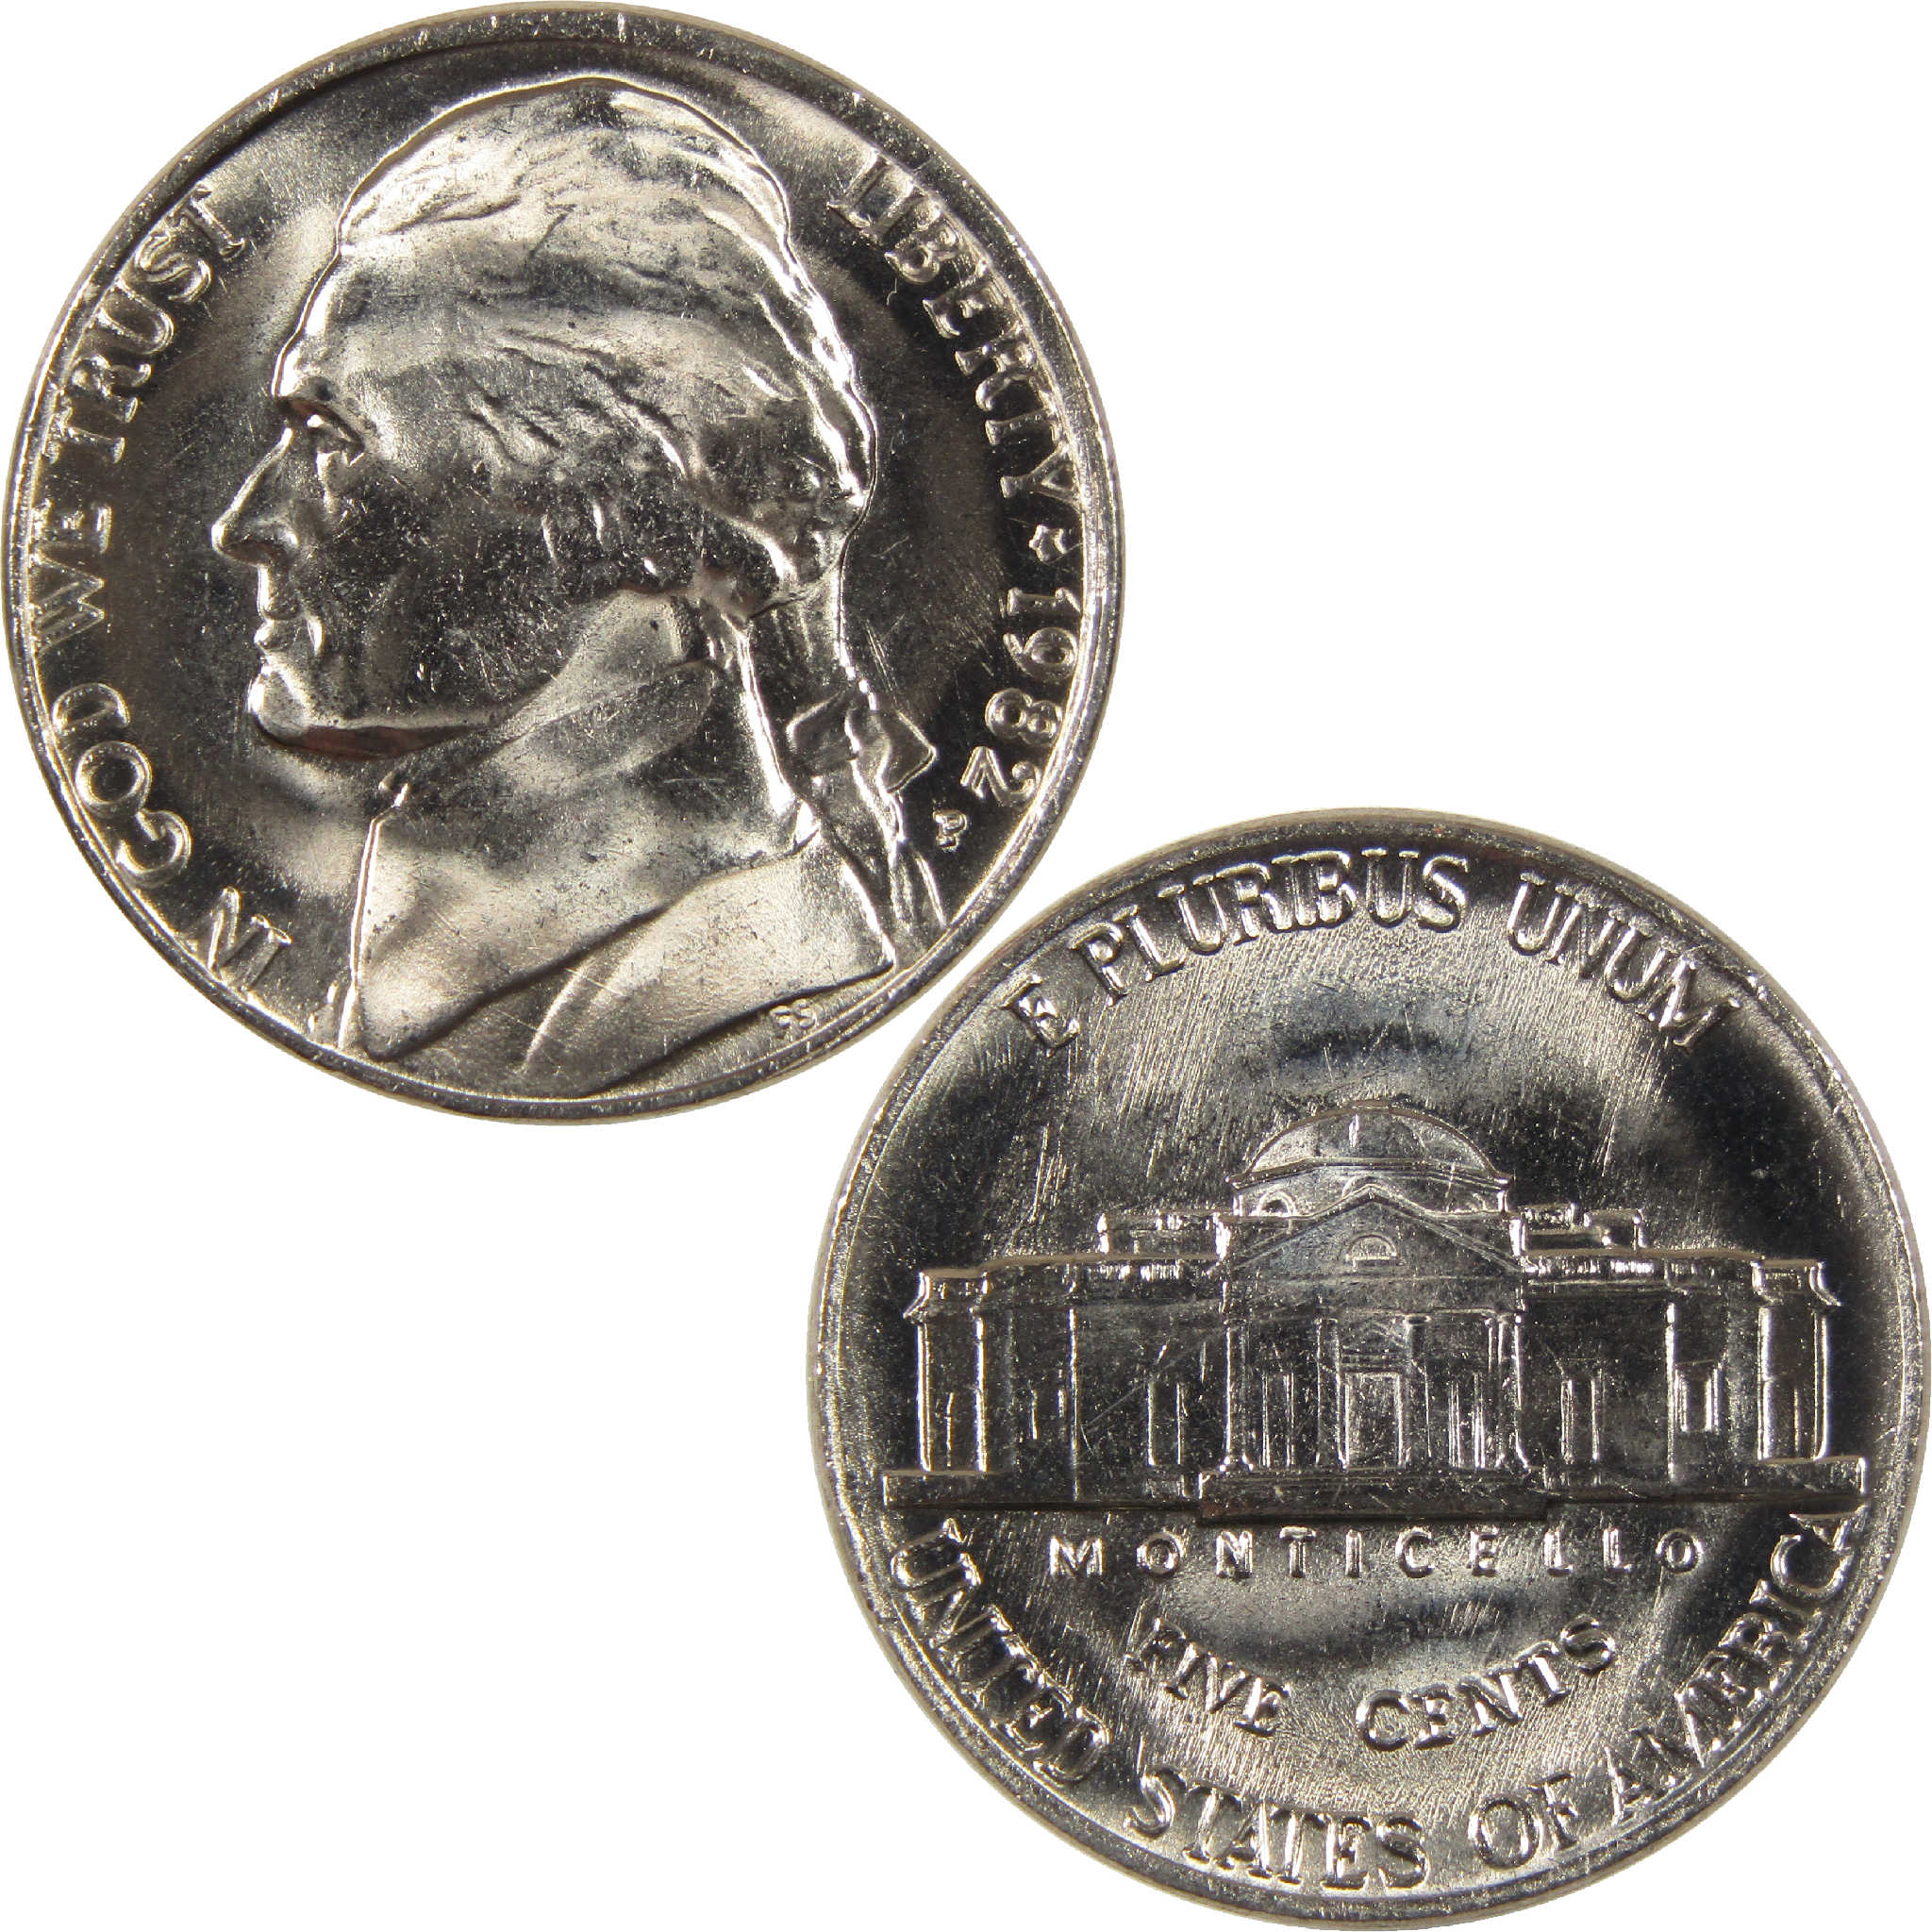 1982 P Jefferson Nickel BU Uncirculated 5c Coin